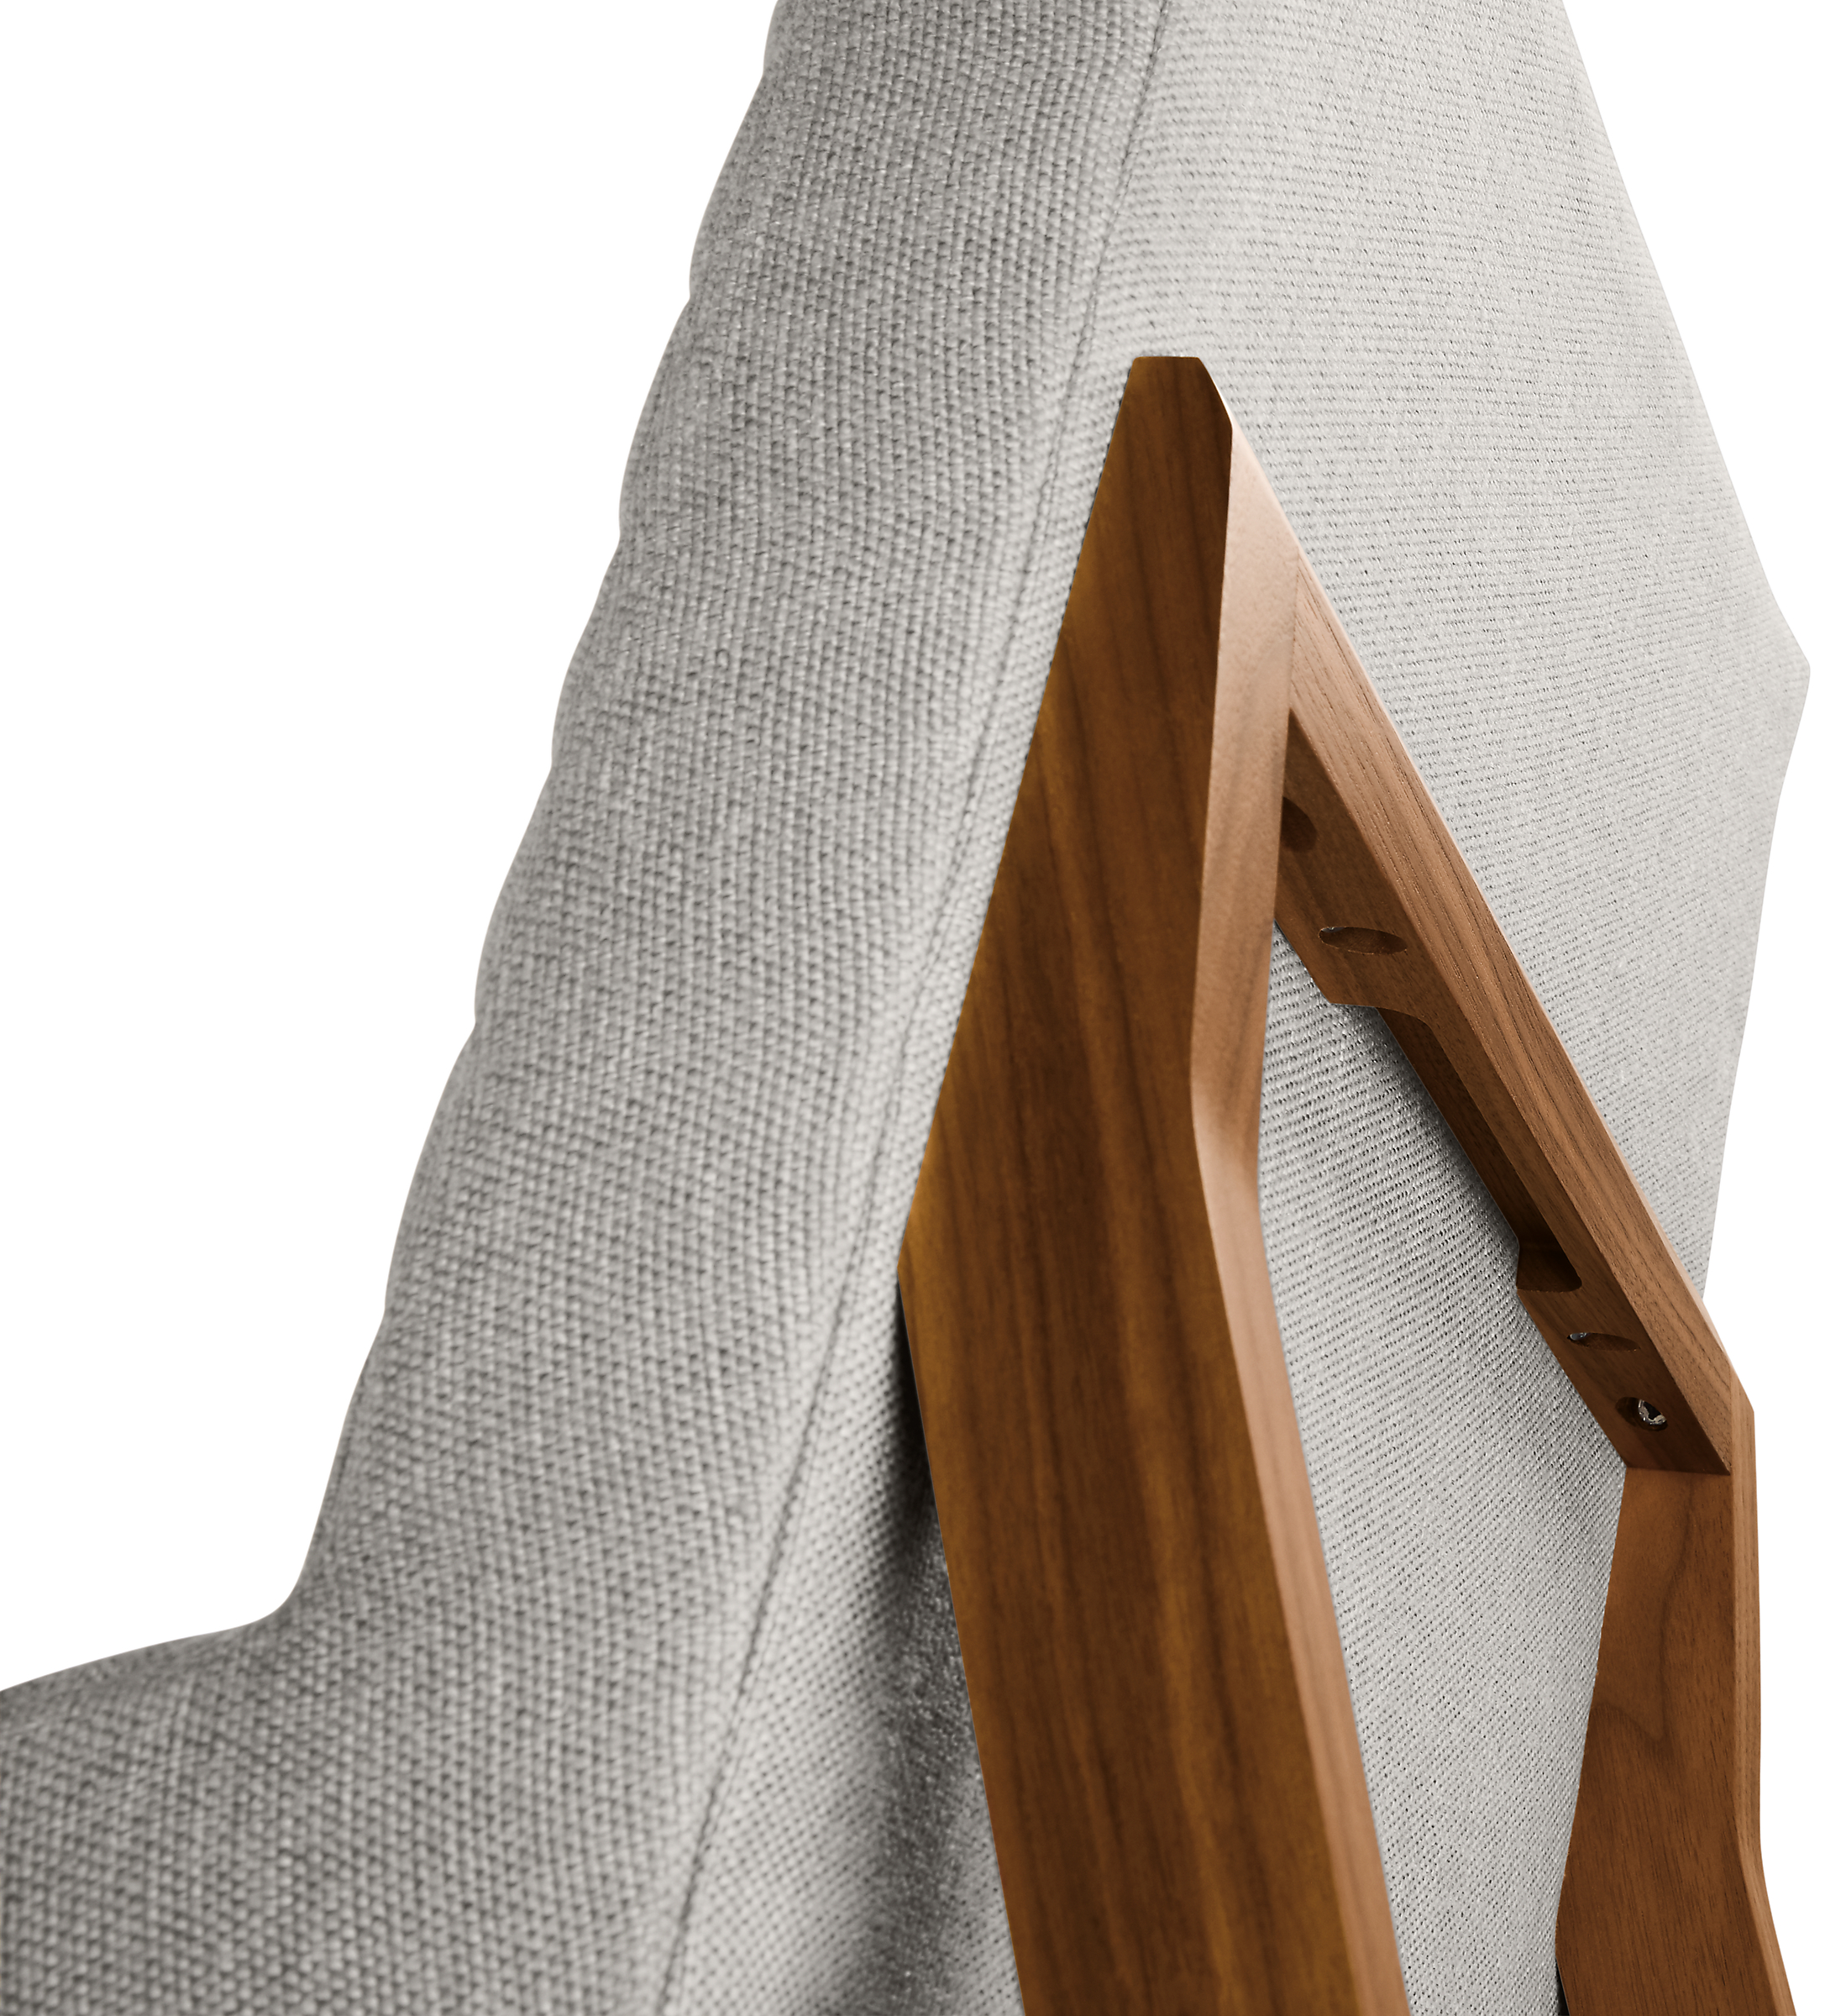 Wood back detail of Olsen side chair.